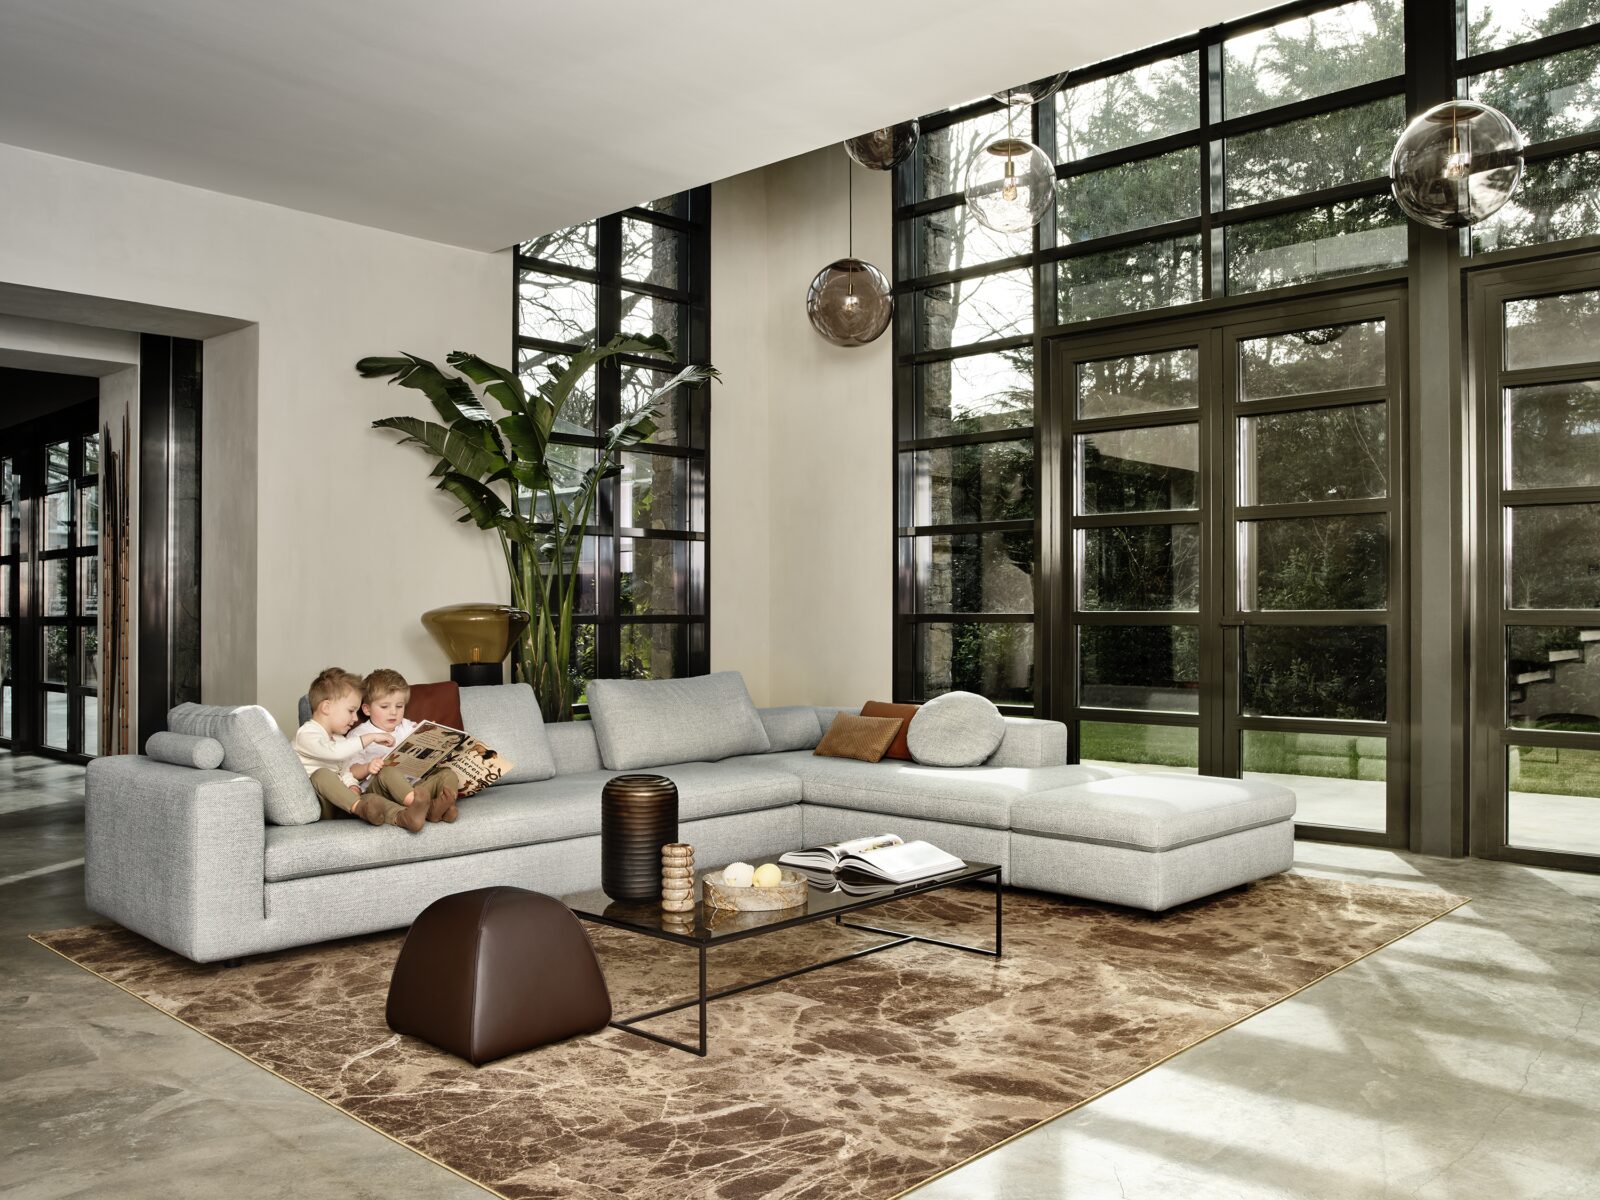 Villaz sofa Design on Stock - Villaz 2